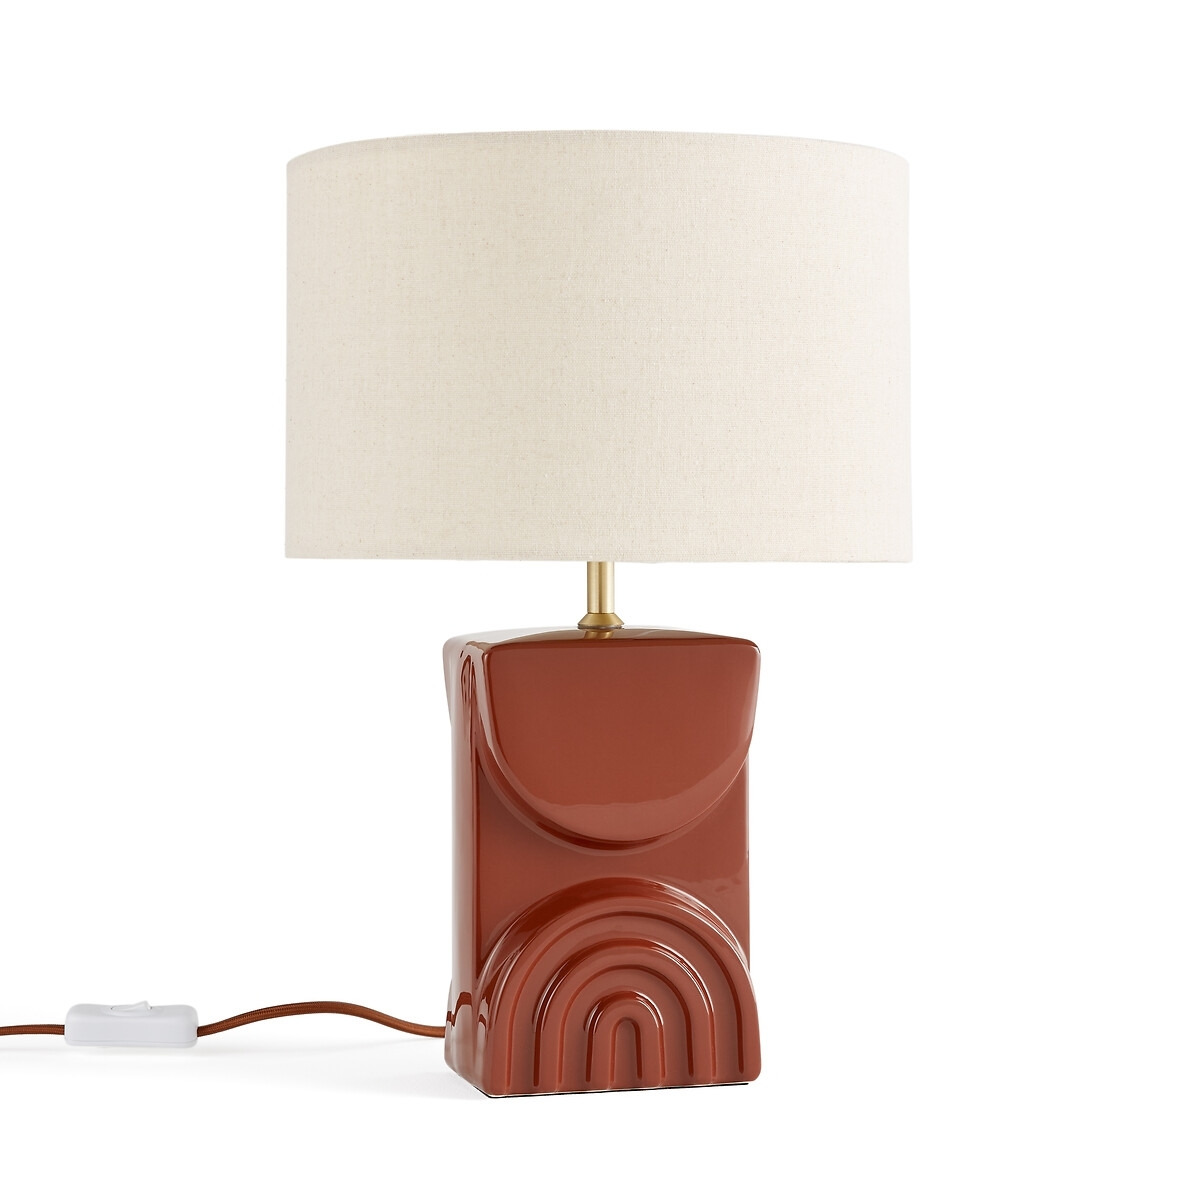 Topia Ceramic & Linen Table Lamp - image 1